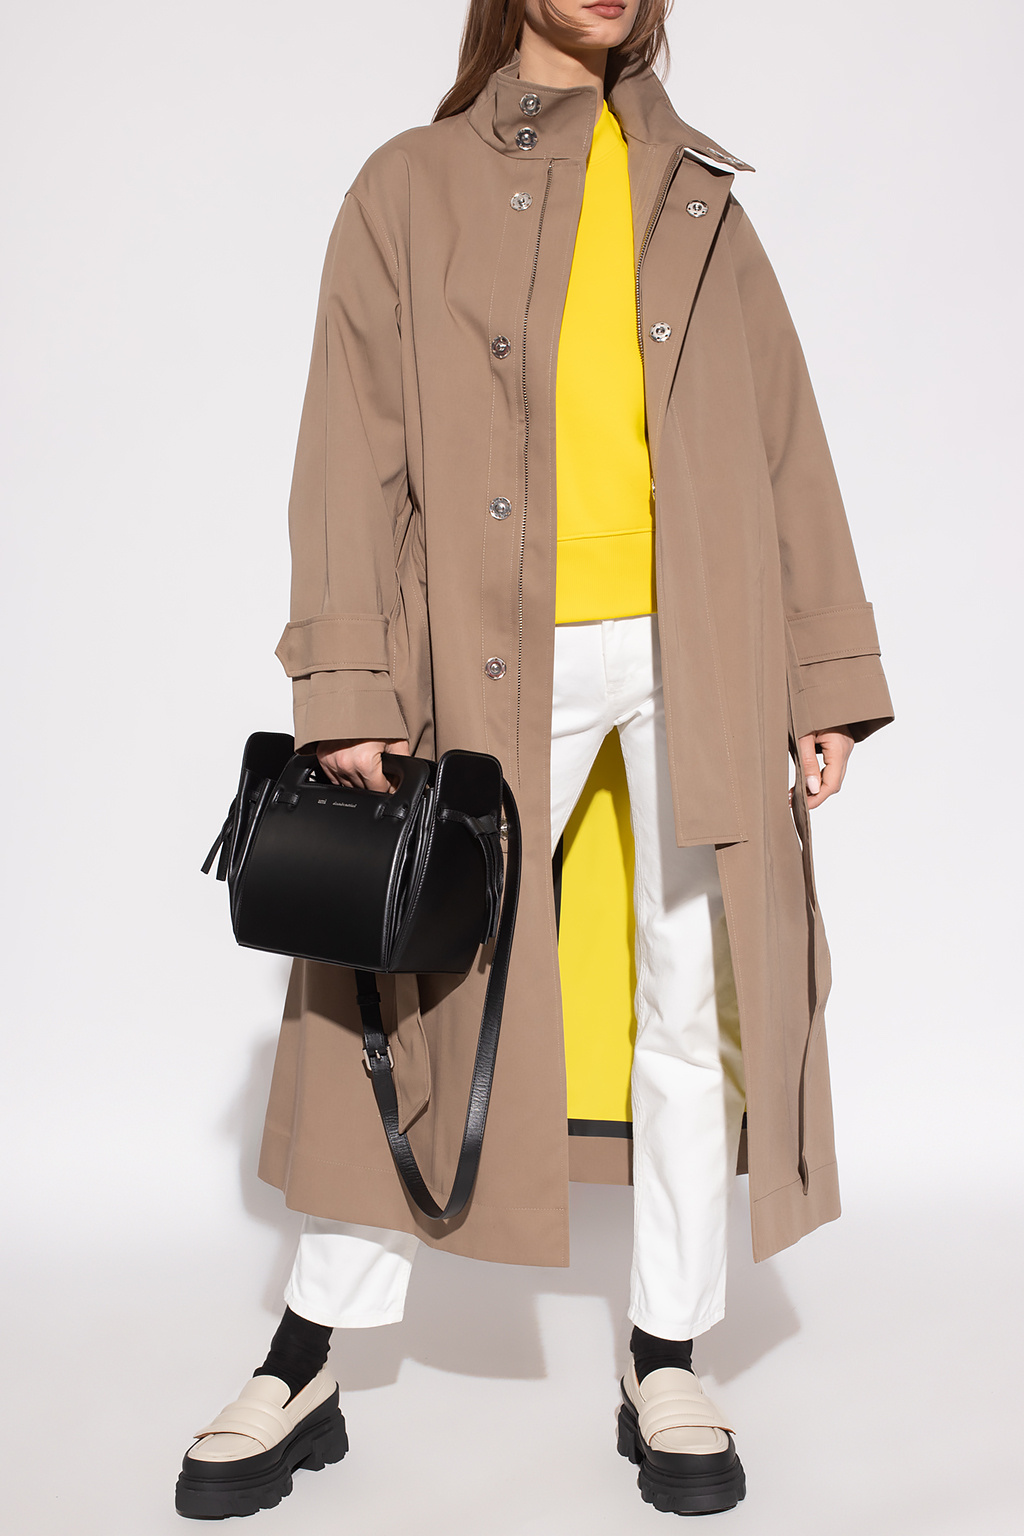 Ami Alexandre Mattiussi Coat with standing collar | Women's Clothing ...